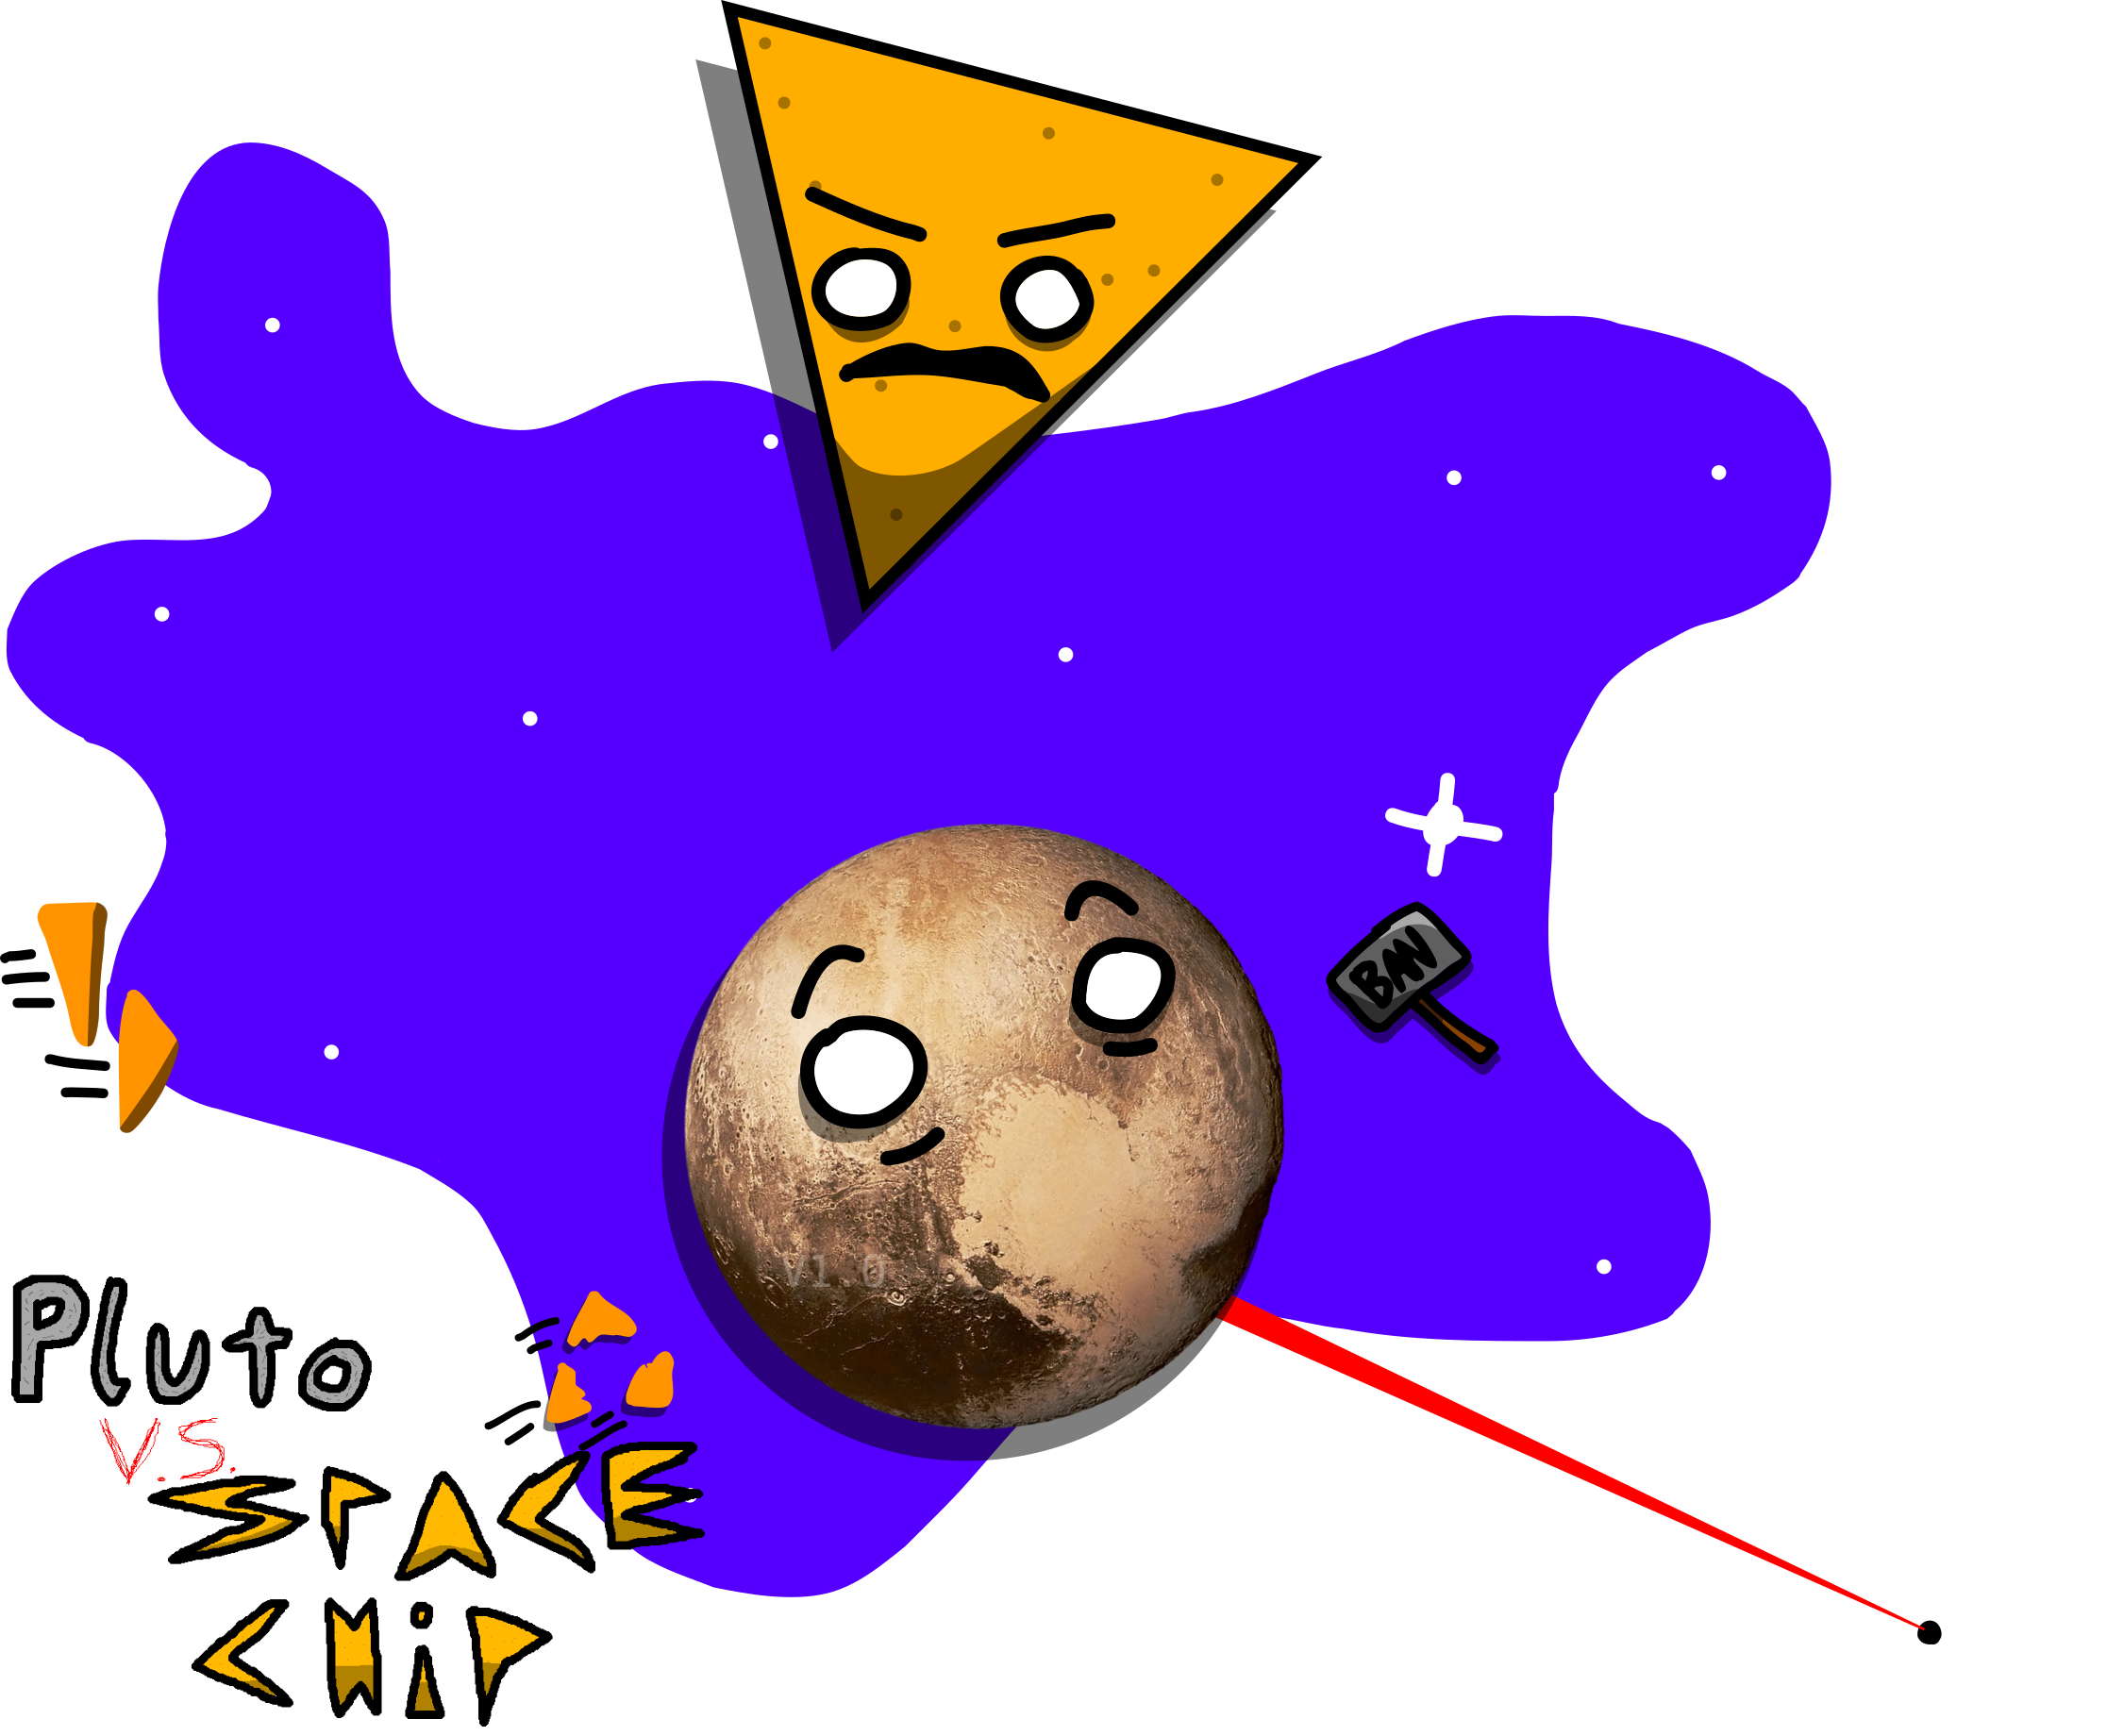 Pluto VS Space Chip